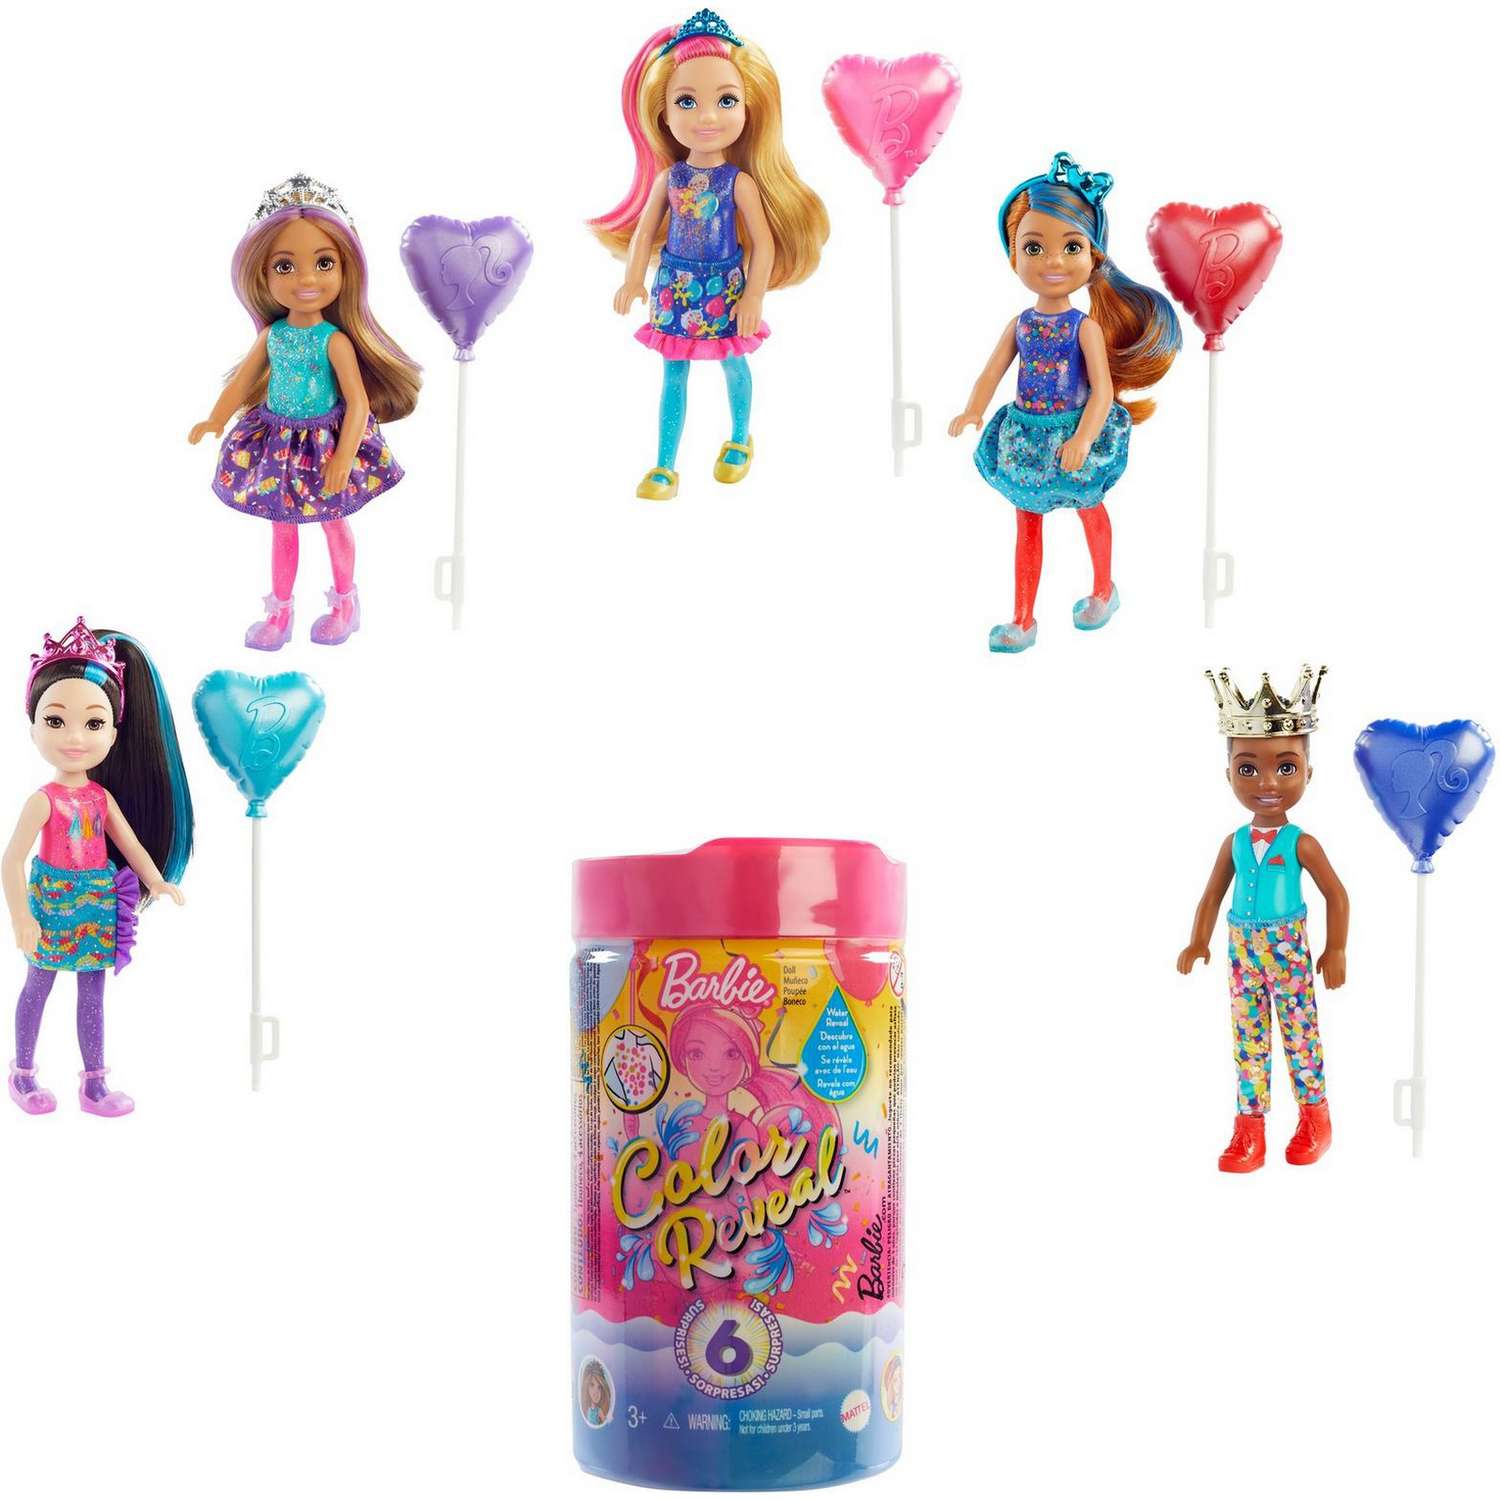 Кукла Barbie Челси в ярких нарядах для вечеринки в непрозрачной упаковке (Сюрприз) GTT26 GTT26 - фото 8